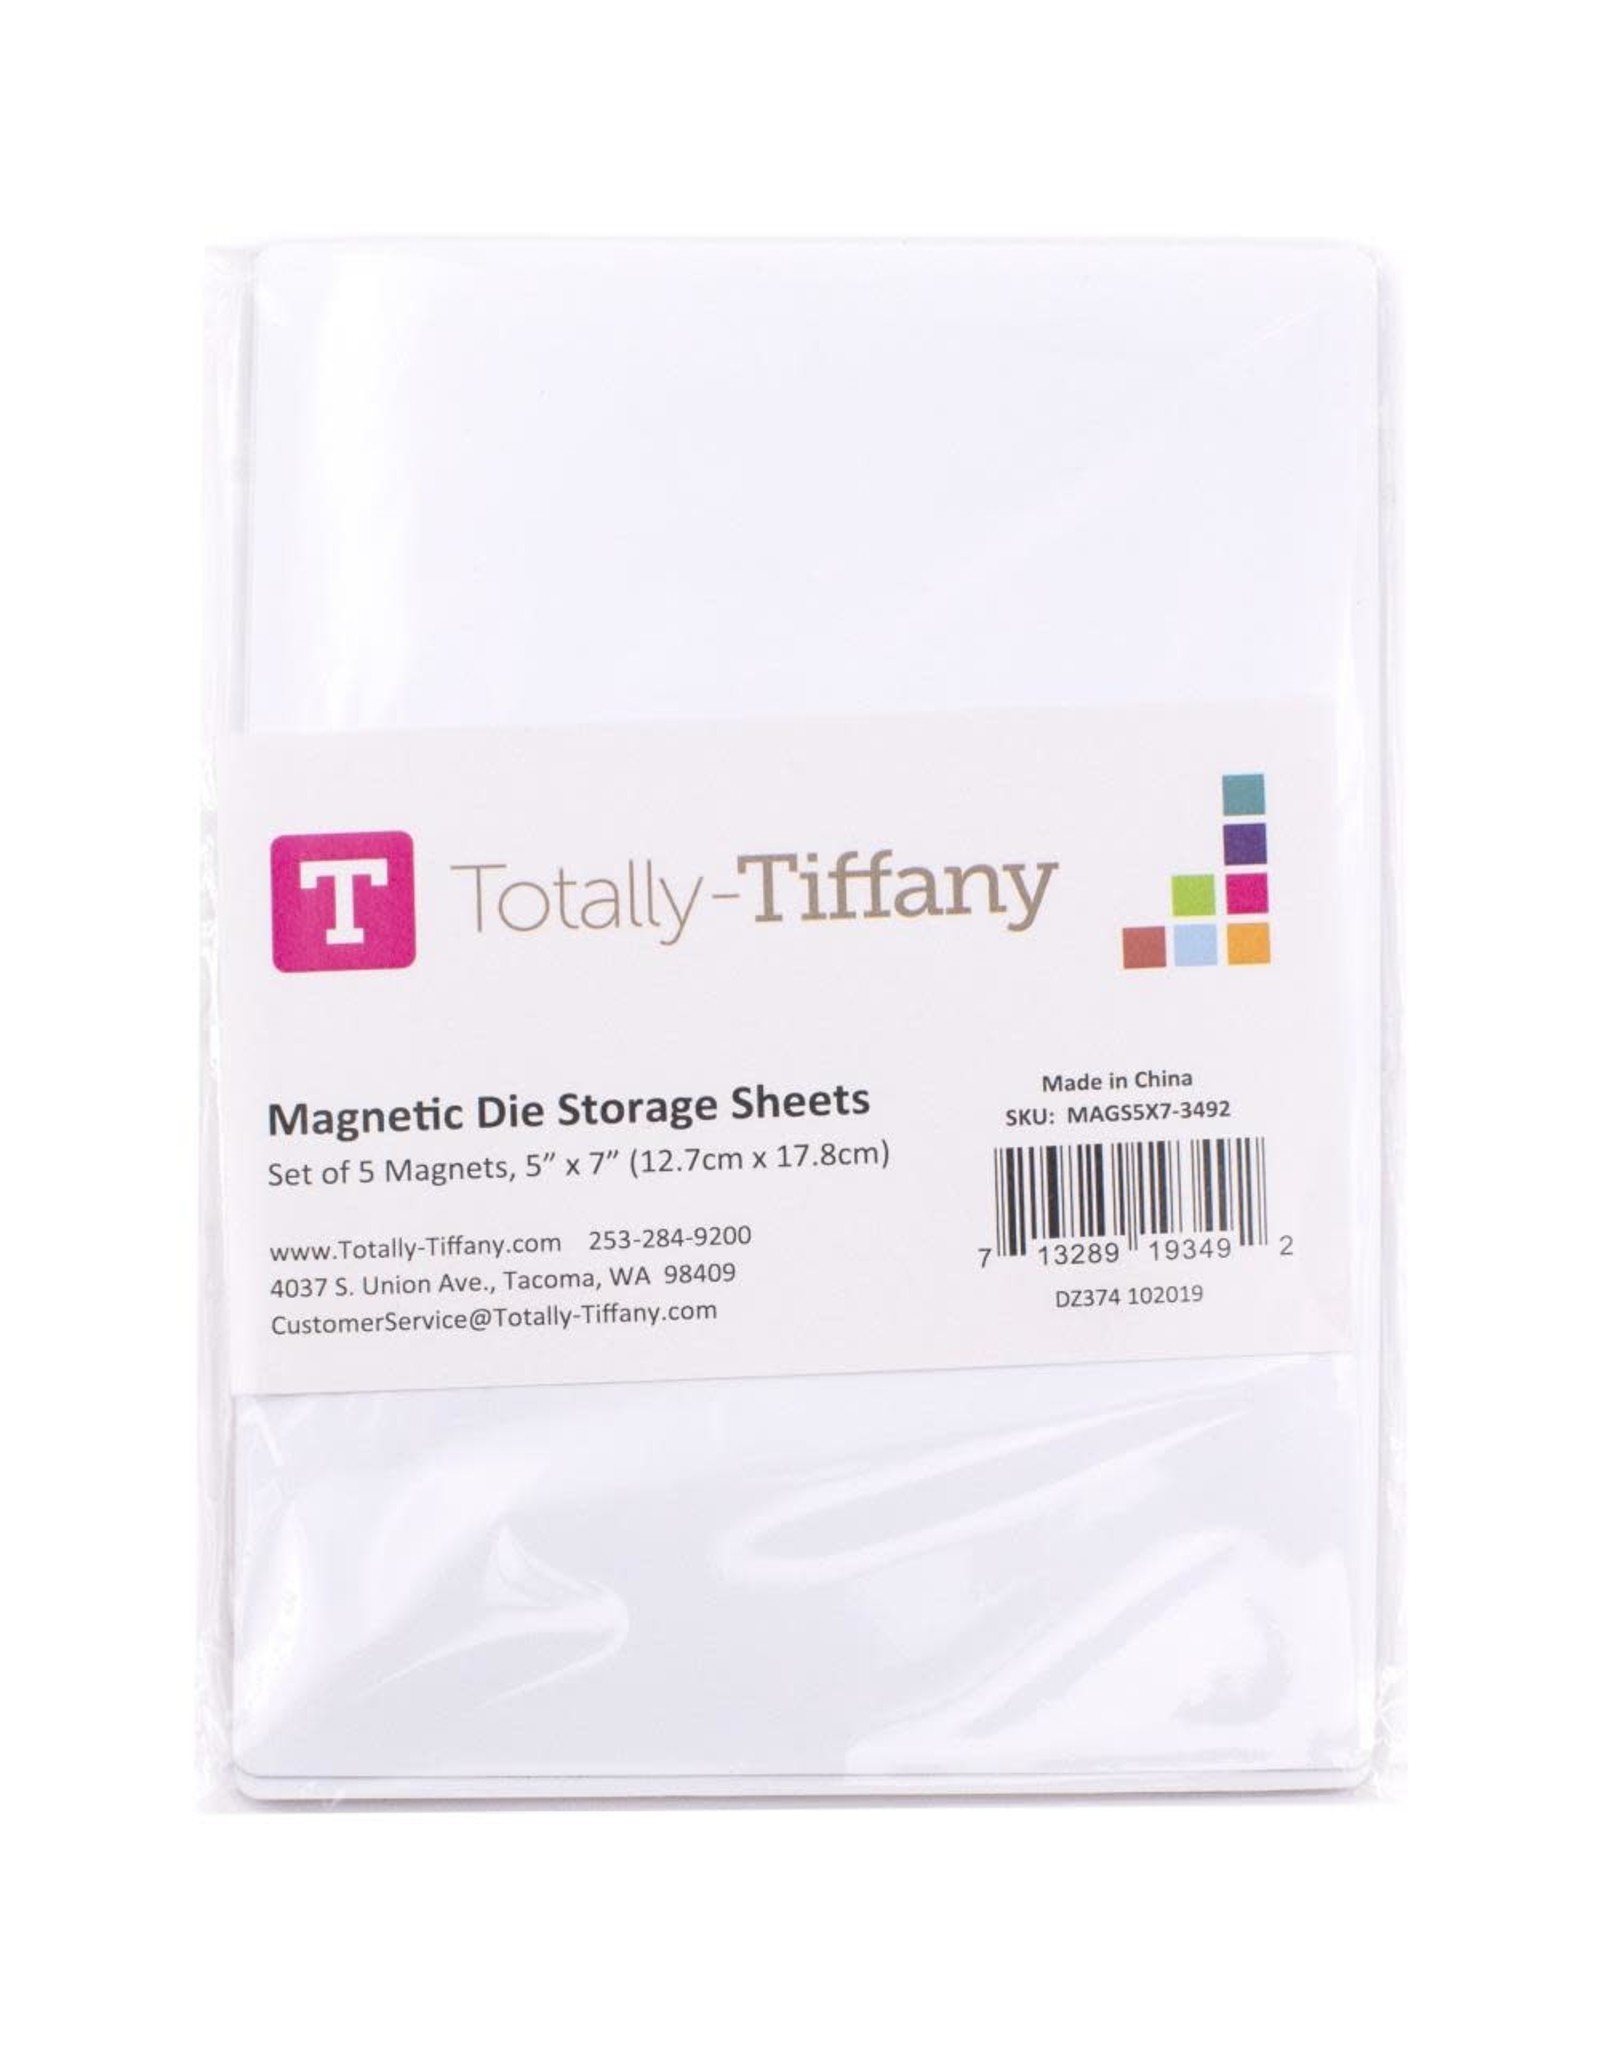 TOTALLY TIFFANY TOTALLY TIFFANY 5x7 MAGNETIC STORAGE SHEETS 5/PK